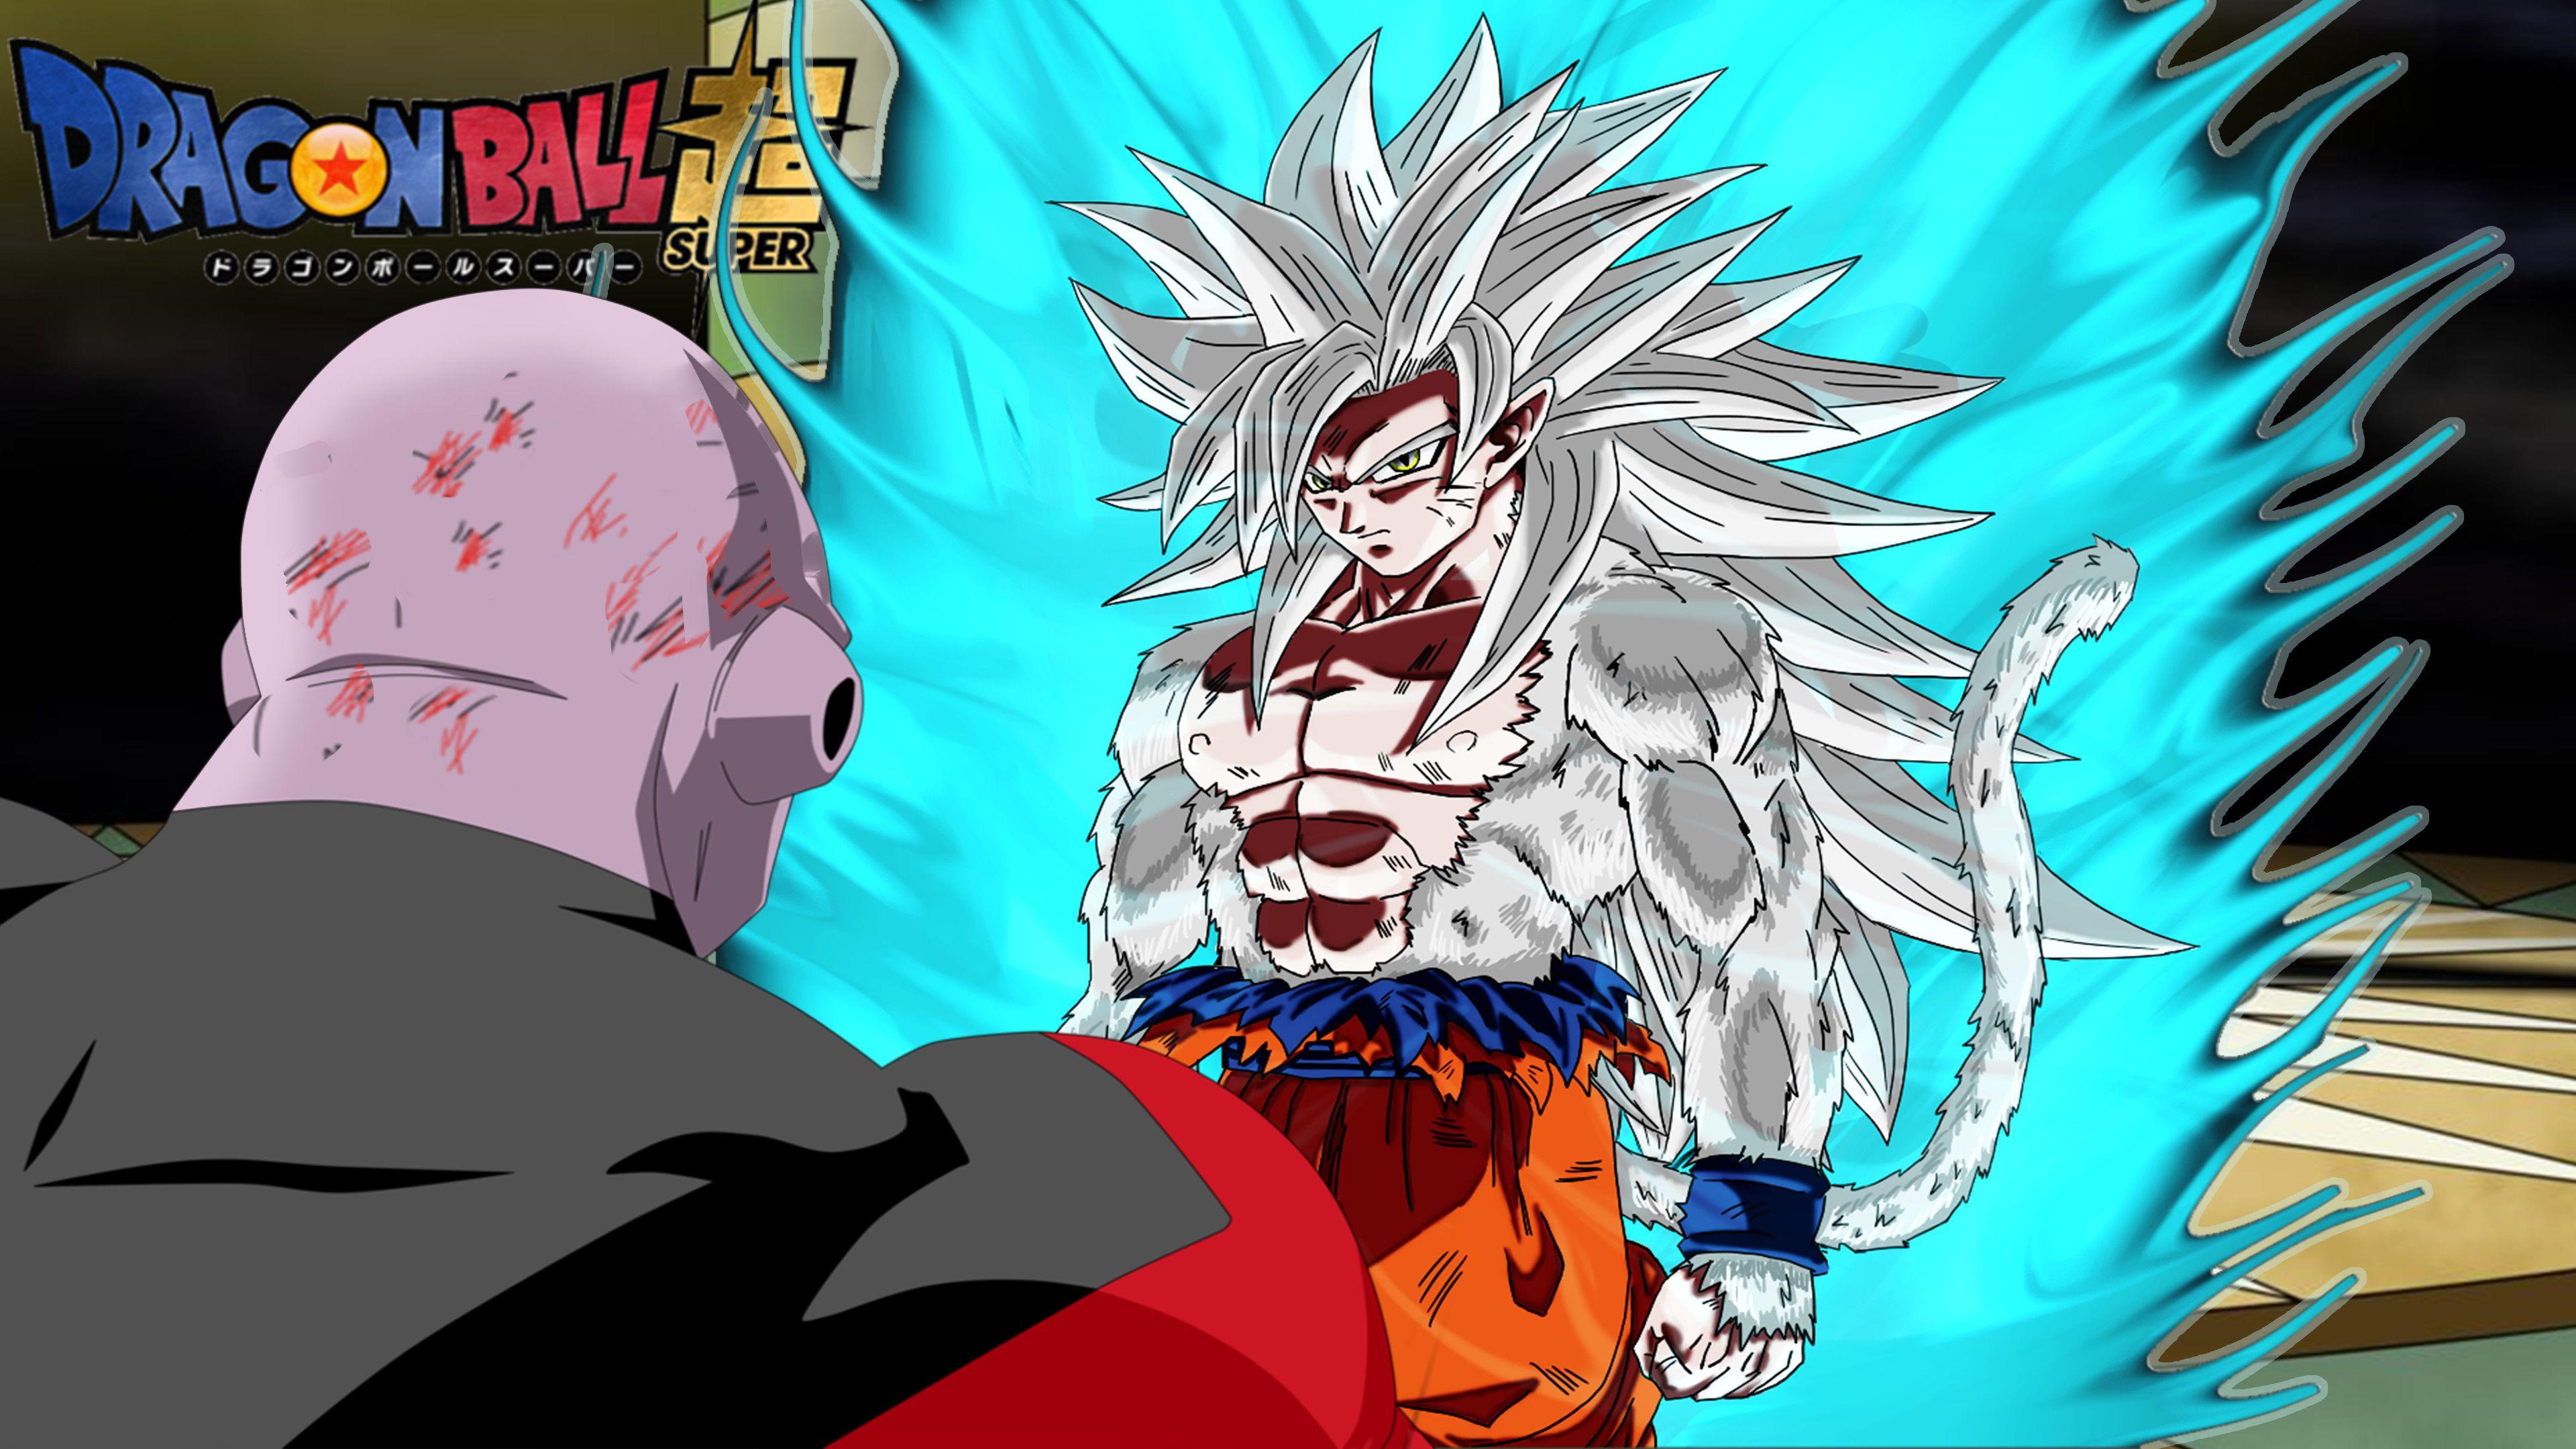 Goku Super Saiyan SSJ5, HD wallpaper